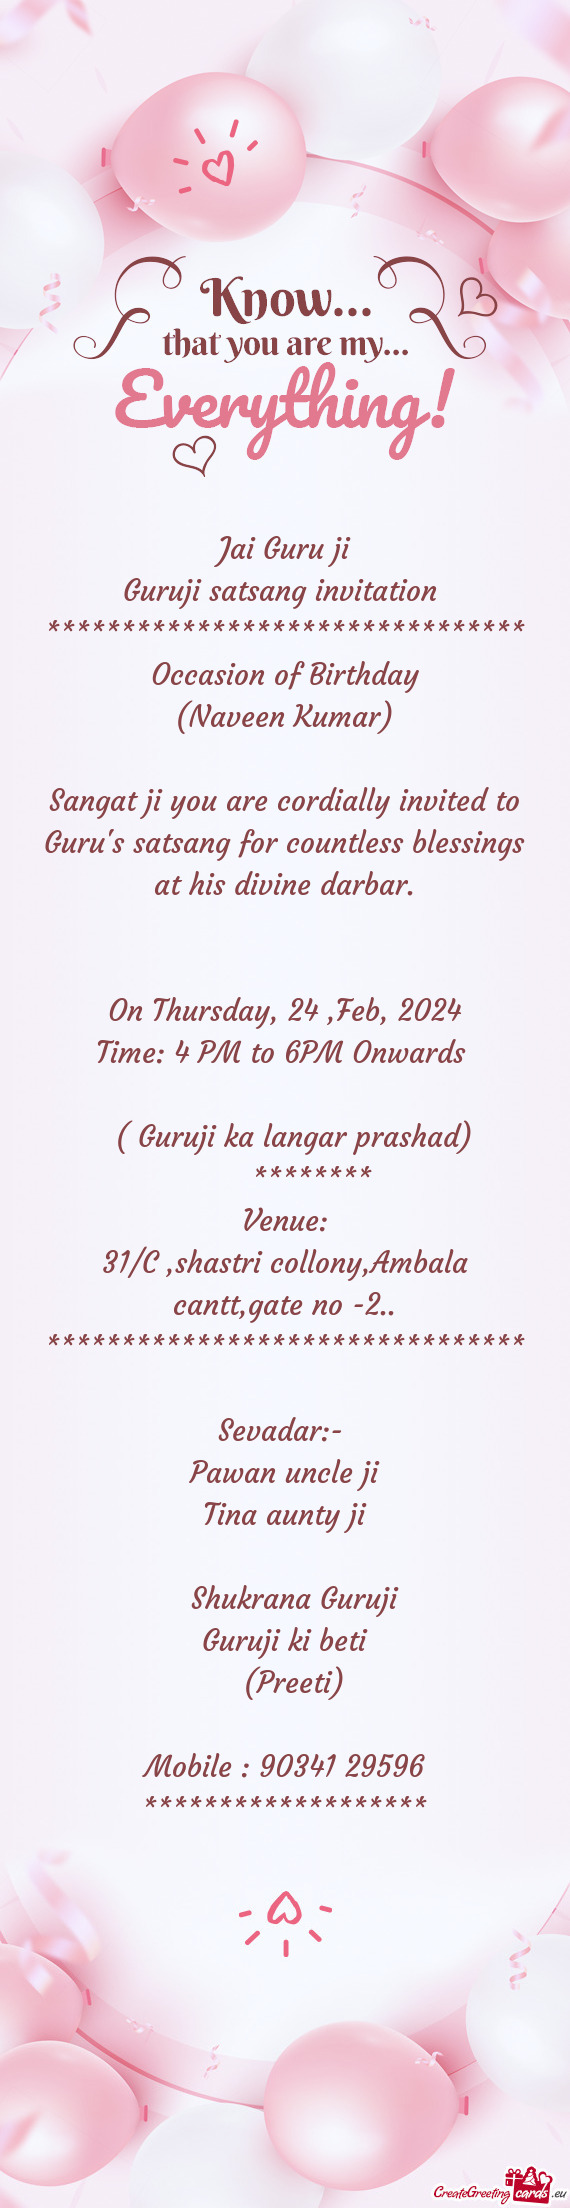 Sangat ji you are cordially invited to Guru